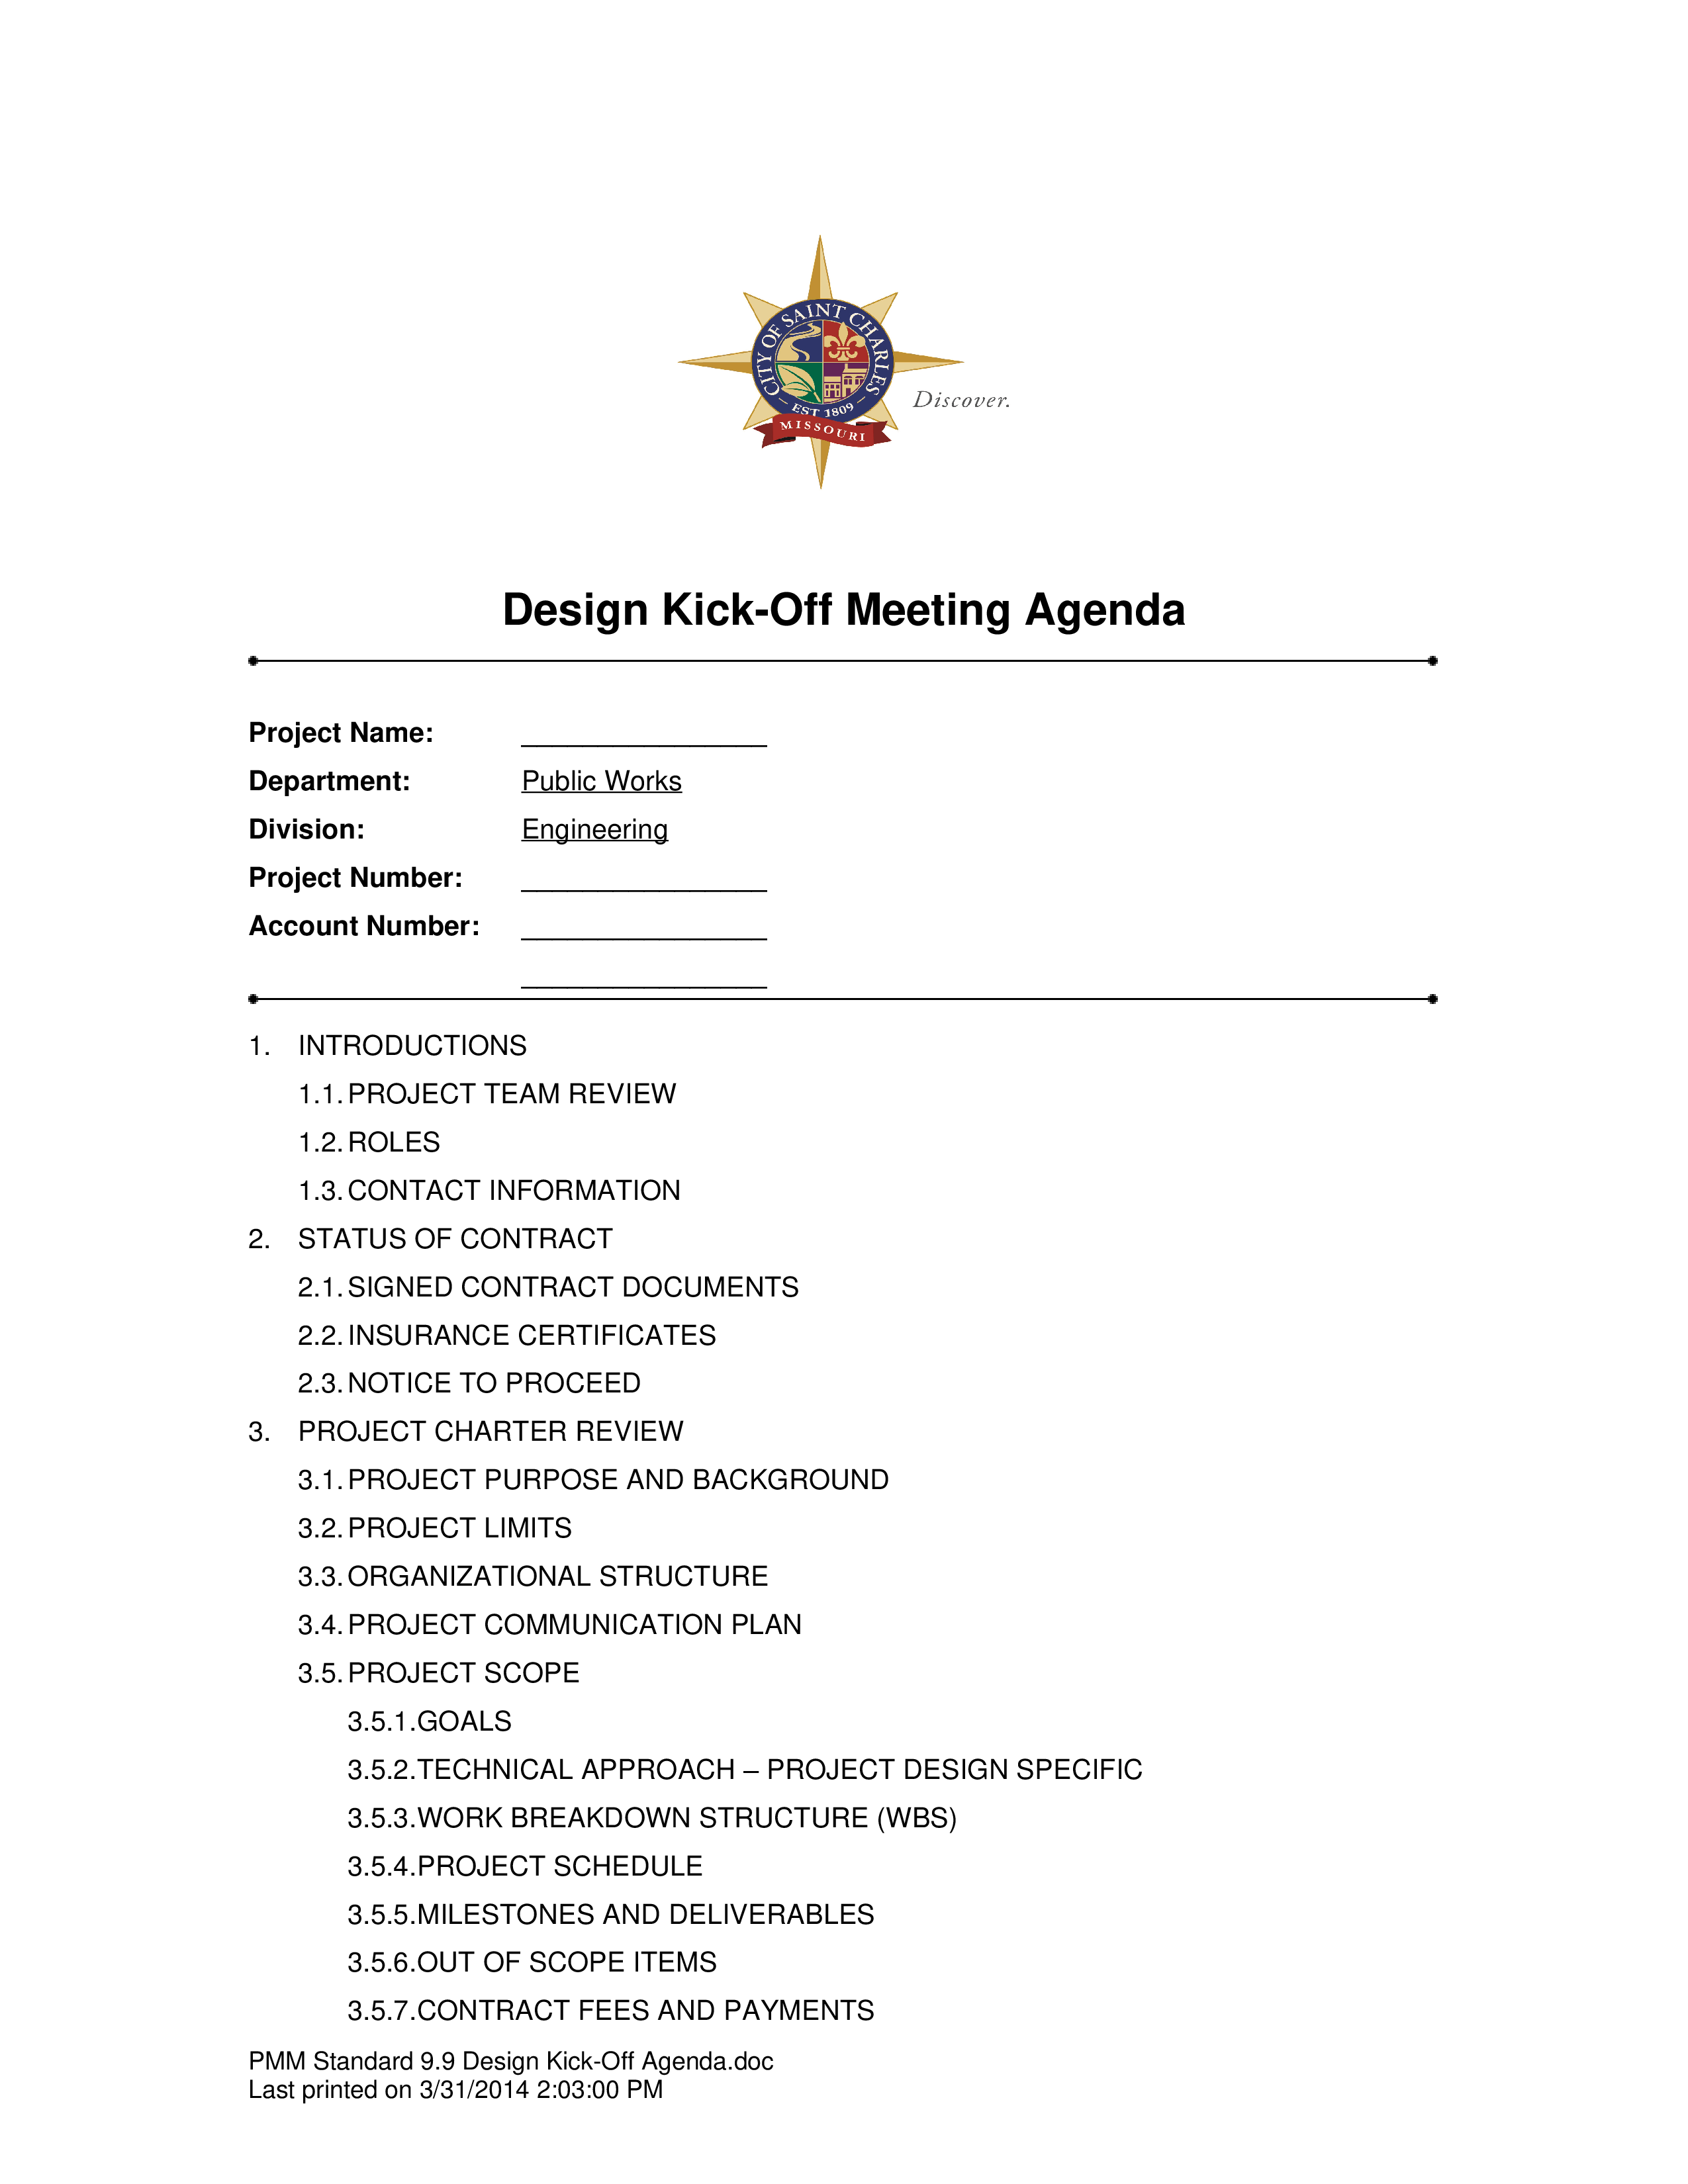 Design Kick Off Meeting Agenda main image